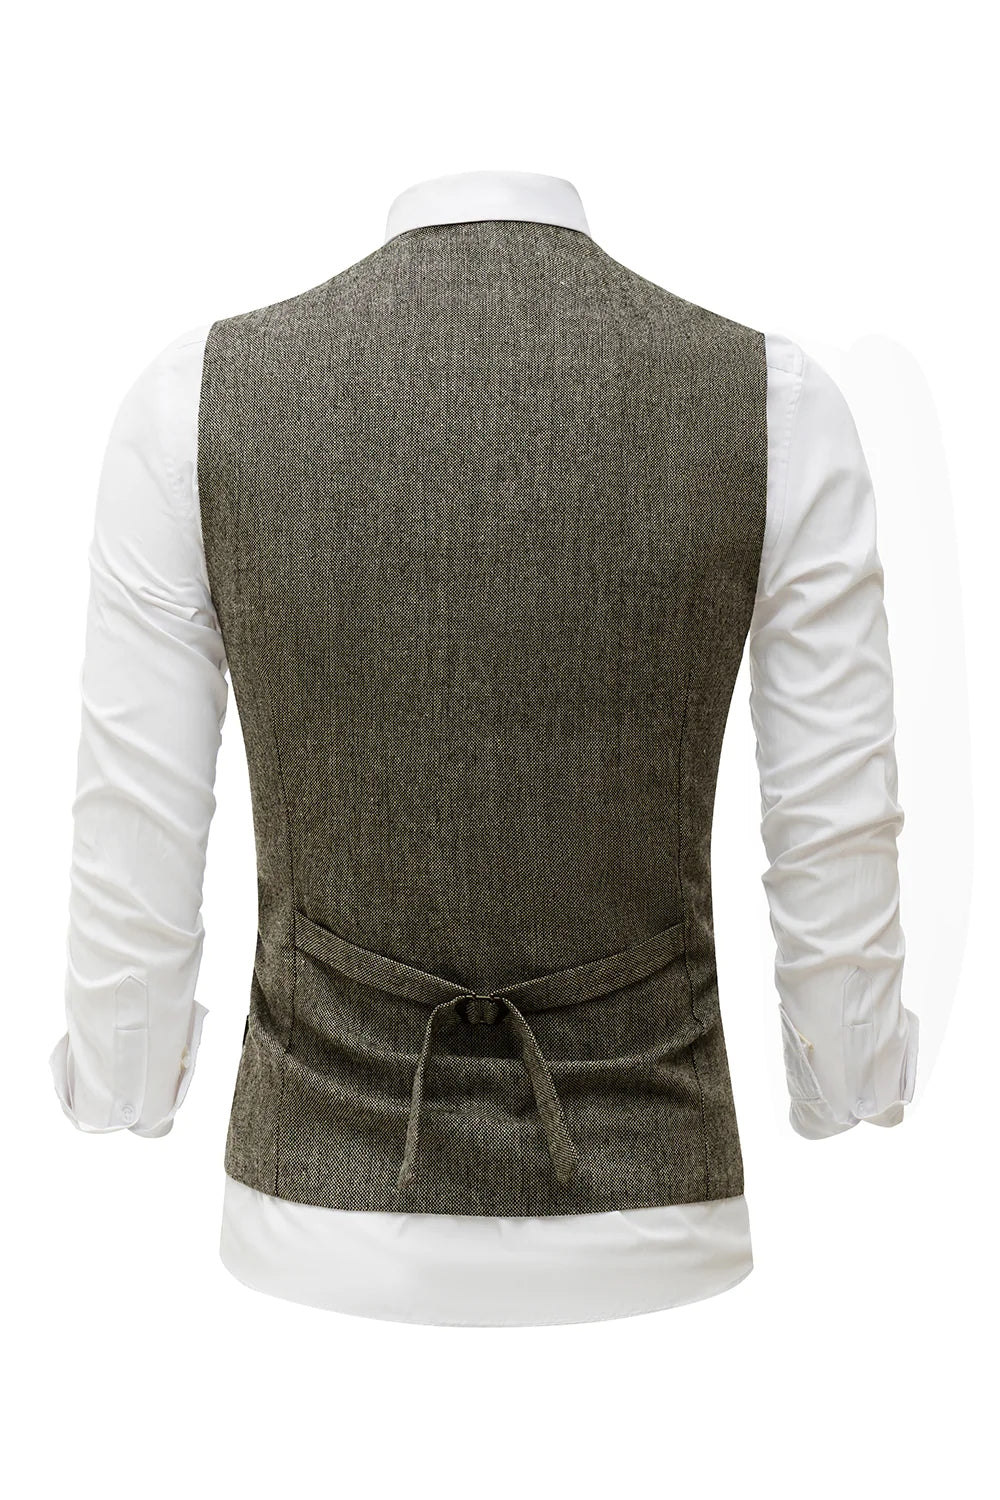 Coffee Shawl Lapel Men's Vest with 5 Pieces Accessories Set